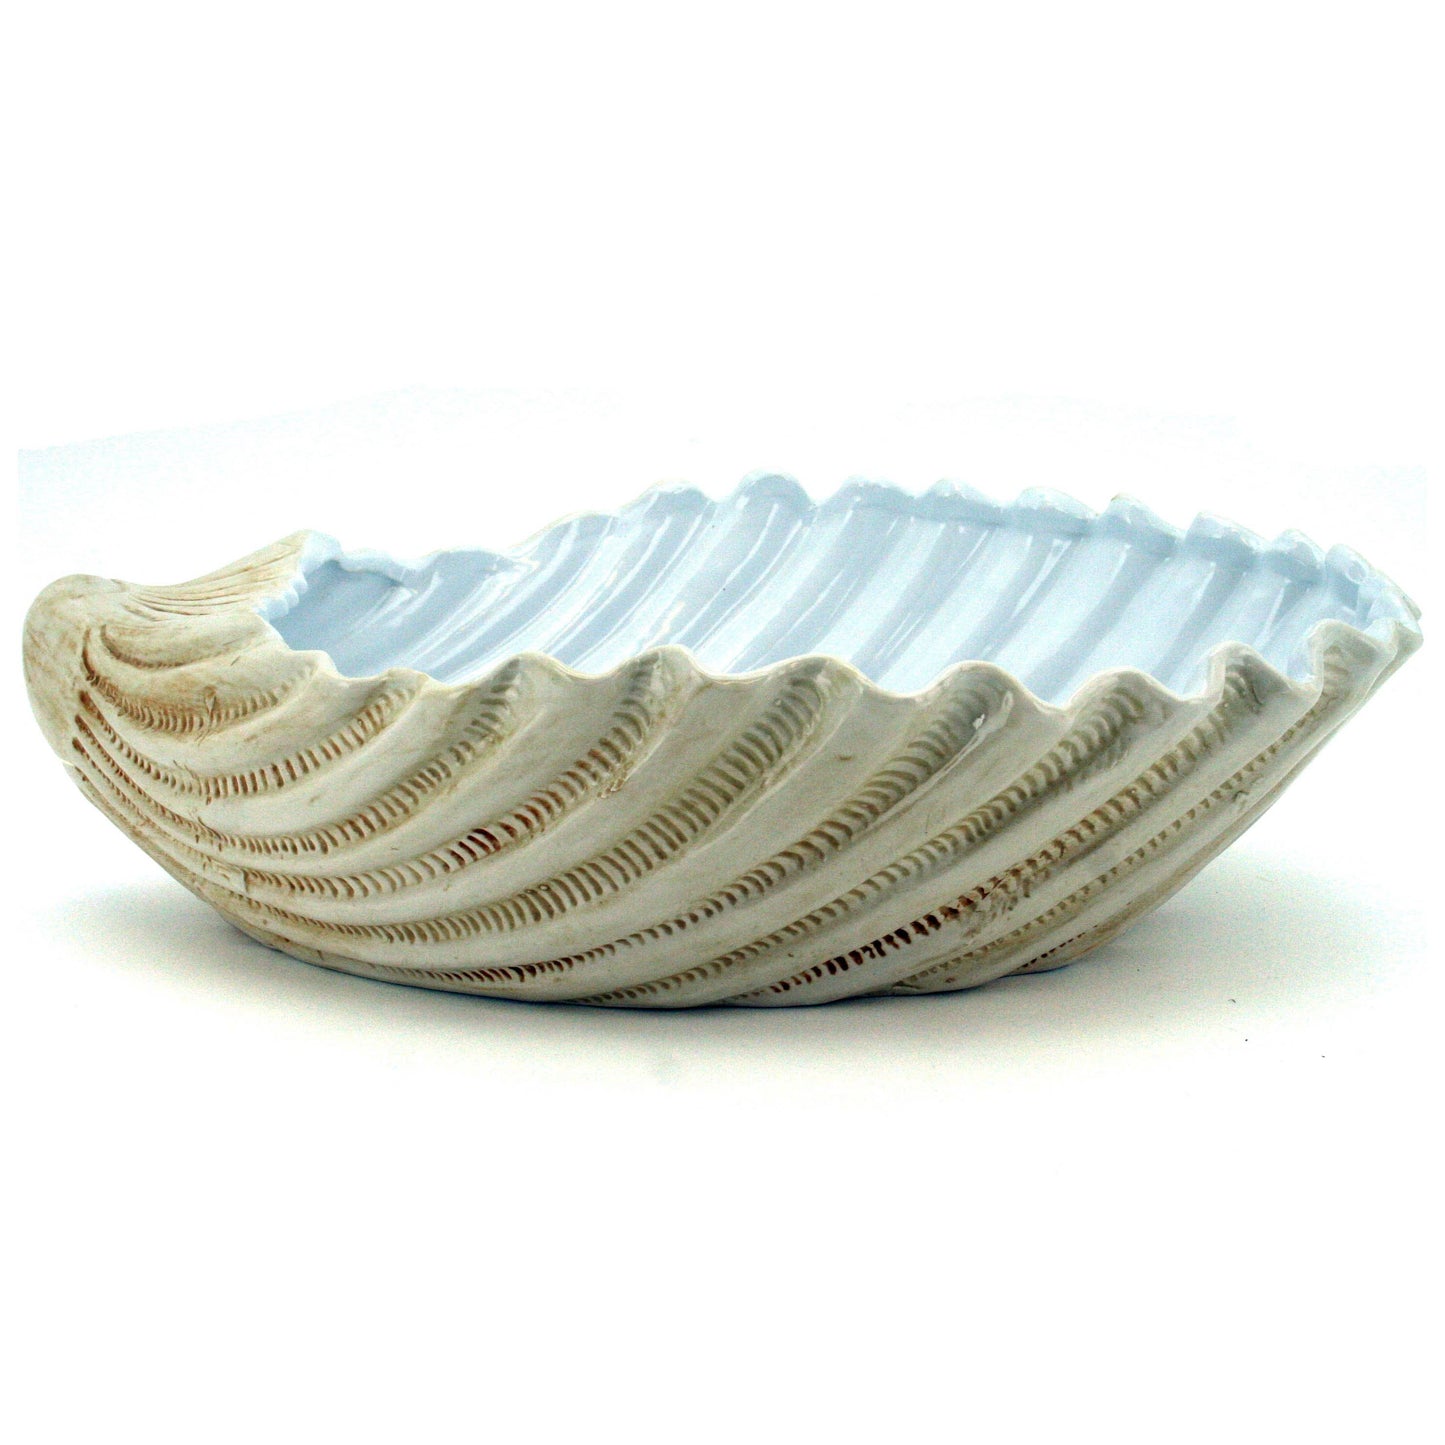 Ceramic Jumbo Clam Shell Bowl